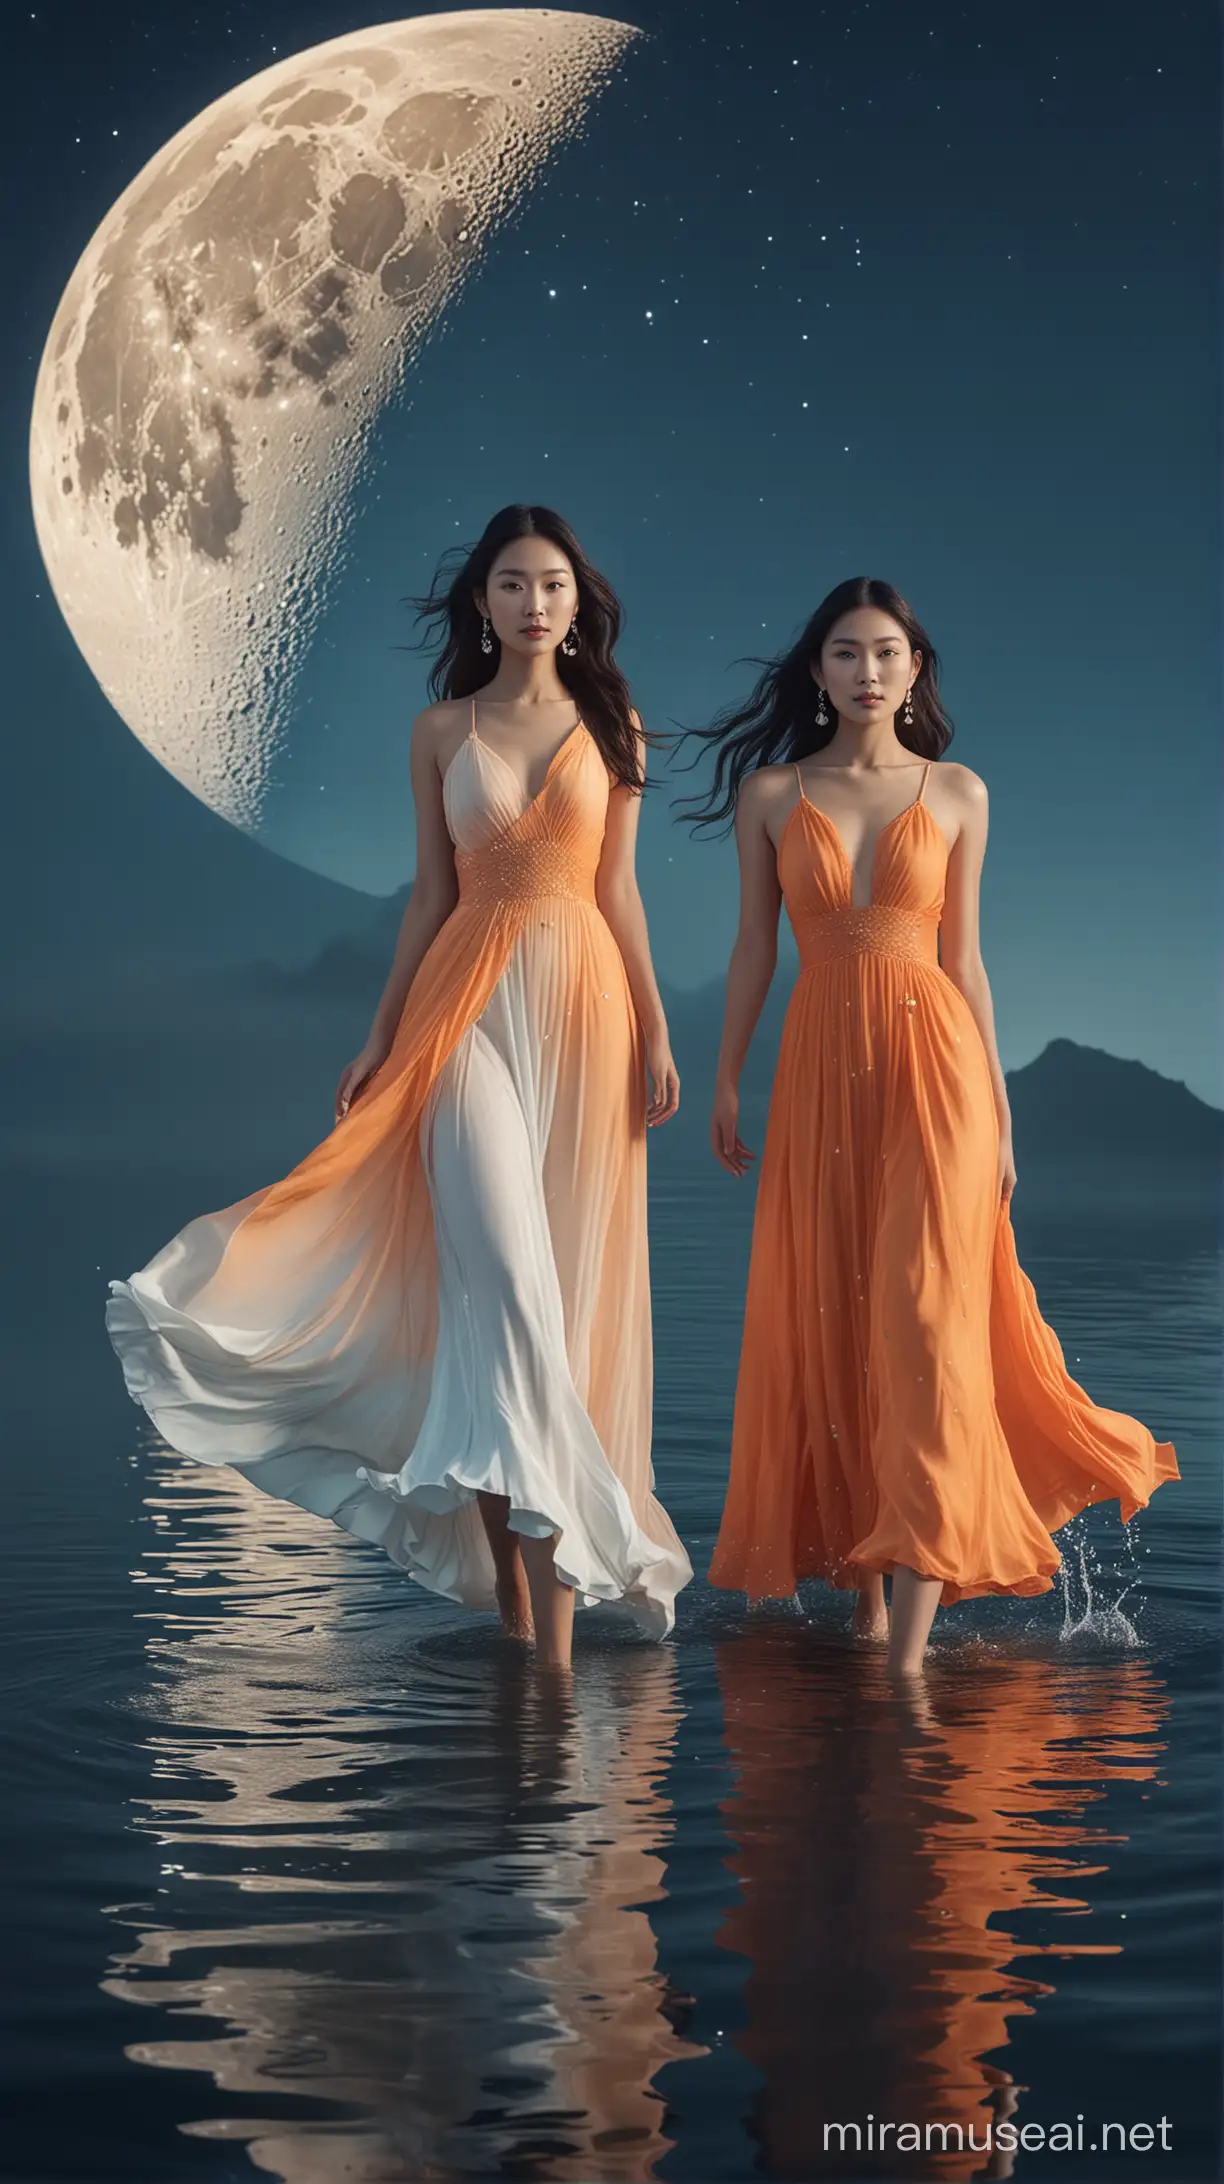 Asian Models in Gradient Silk Dresses on Moonlit Water